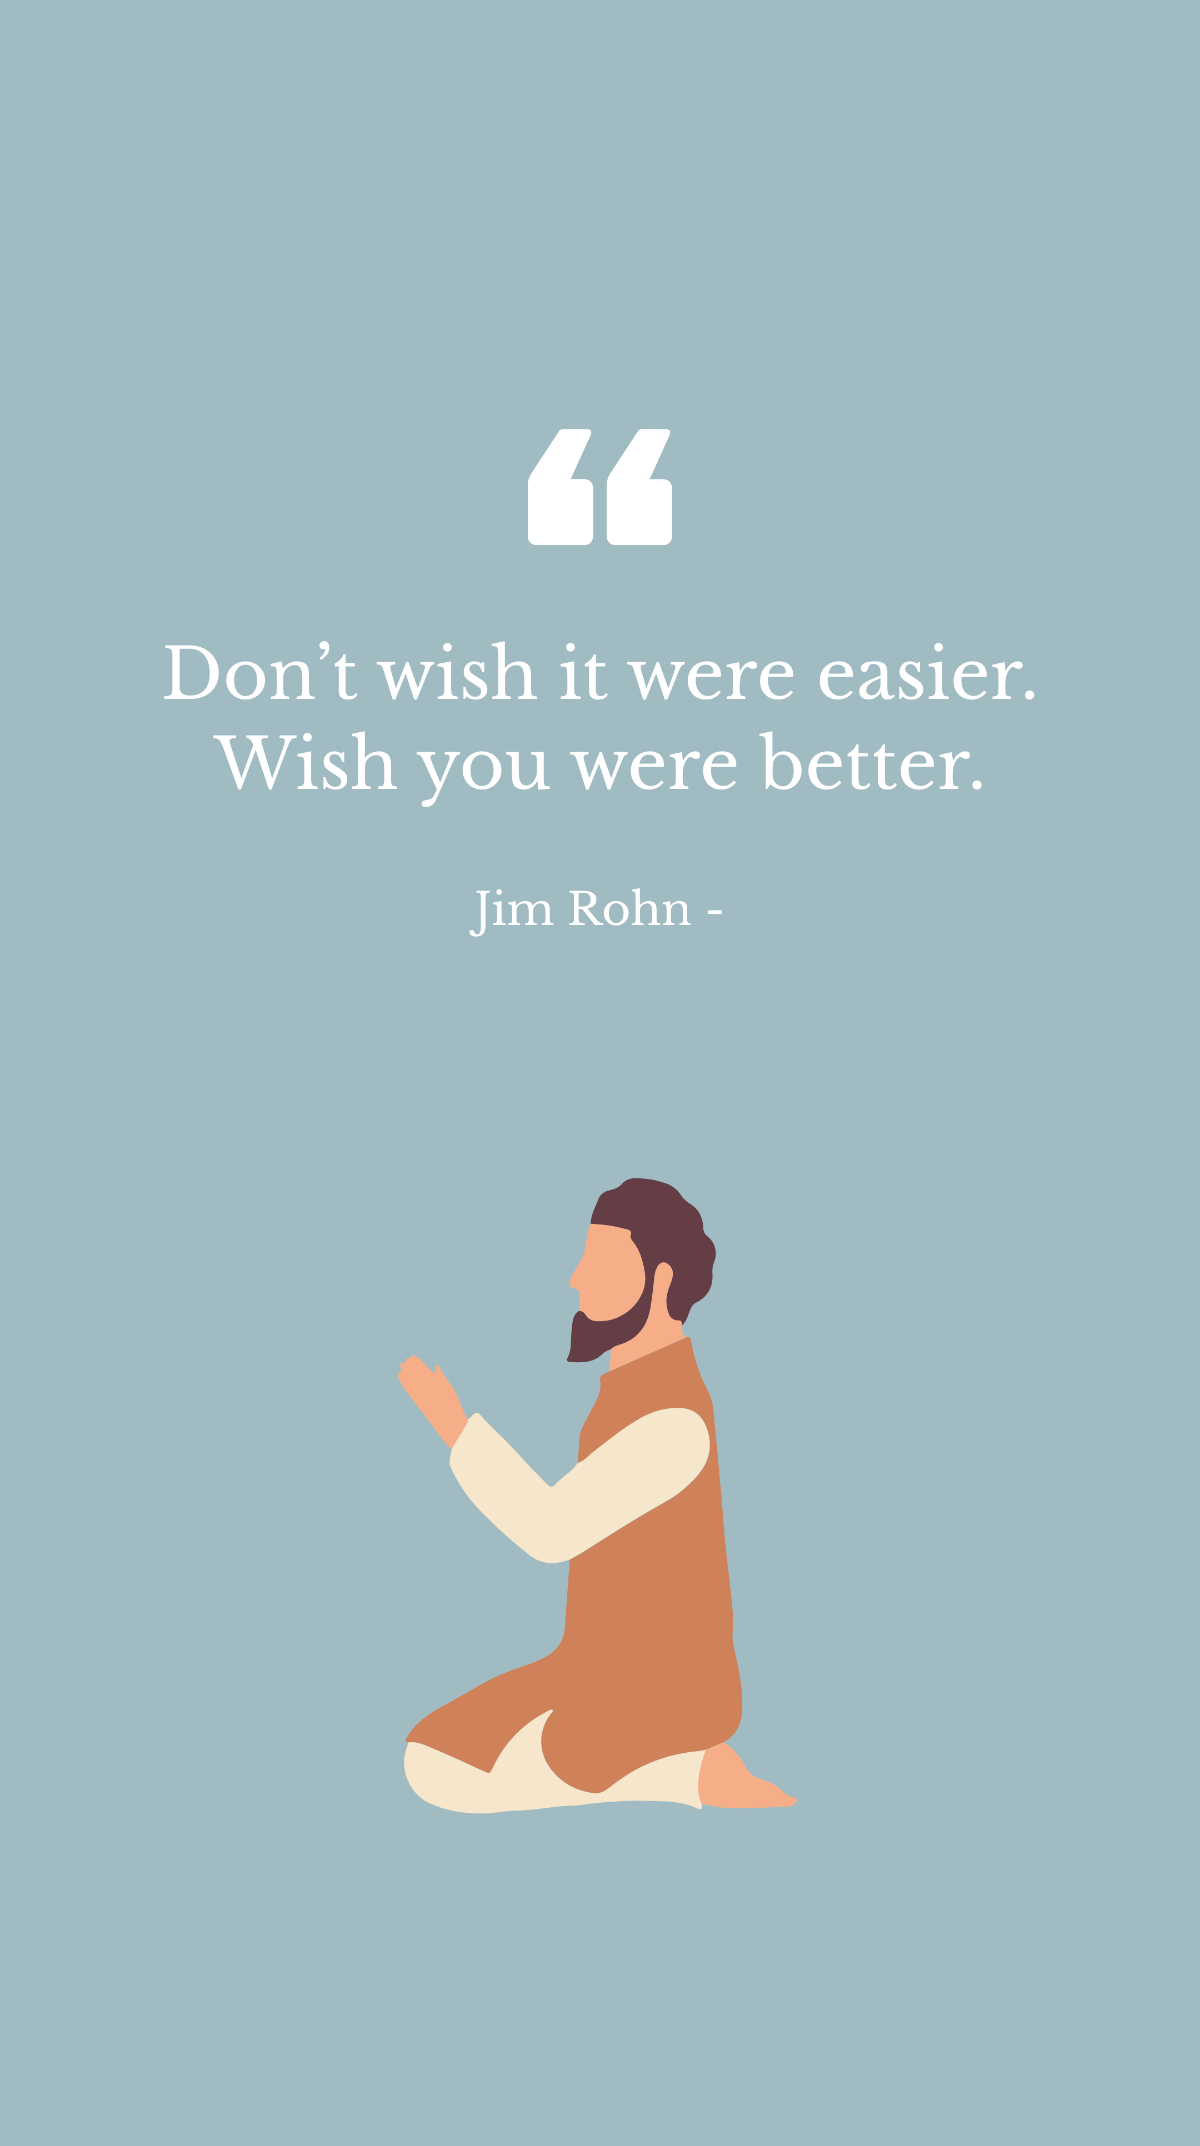 Jim Rohn - Don’t wish it were easier. Wish you were better. Template